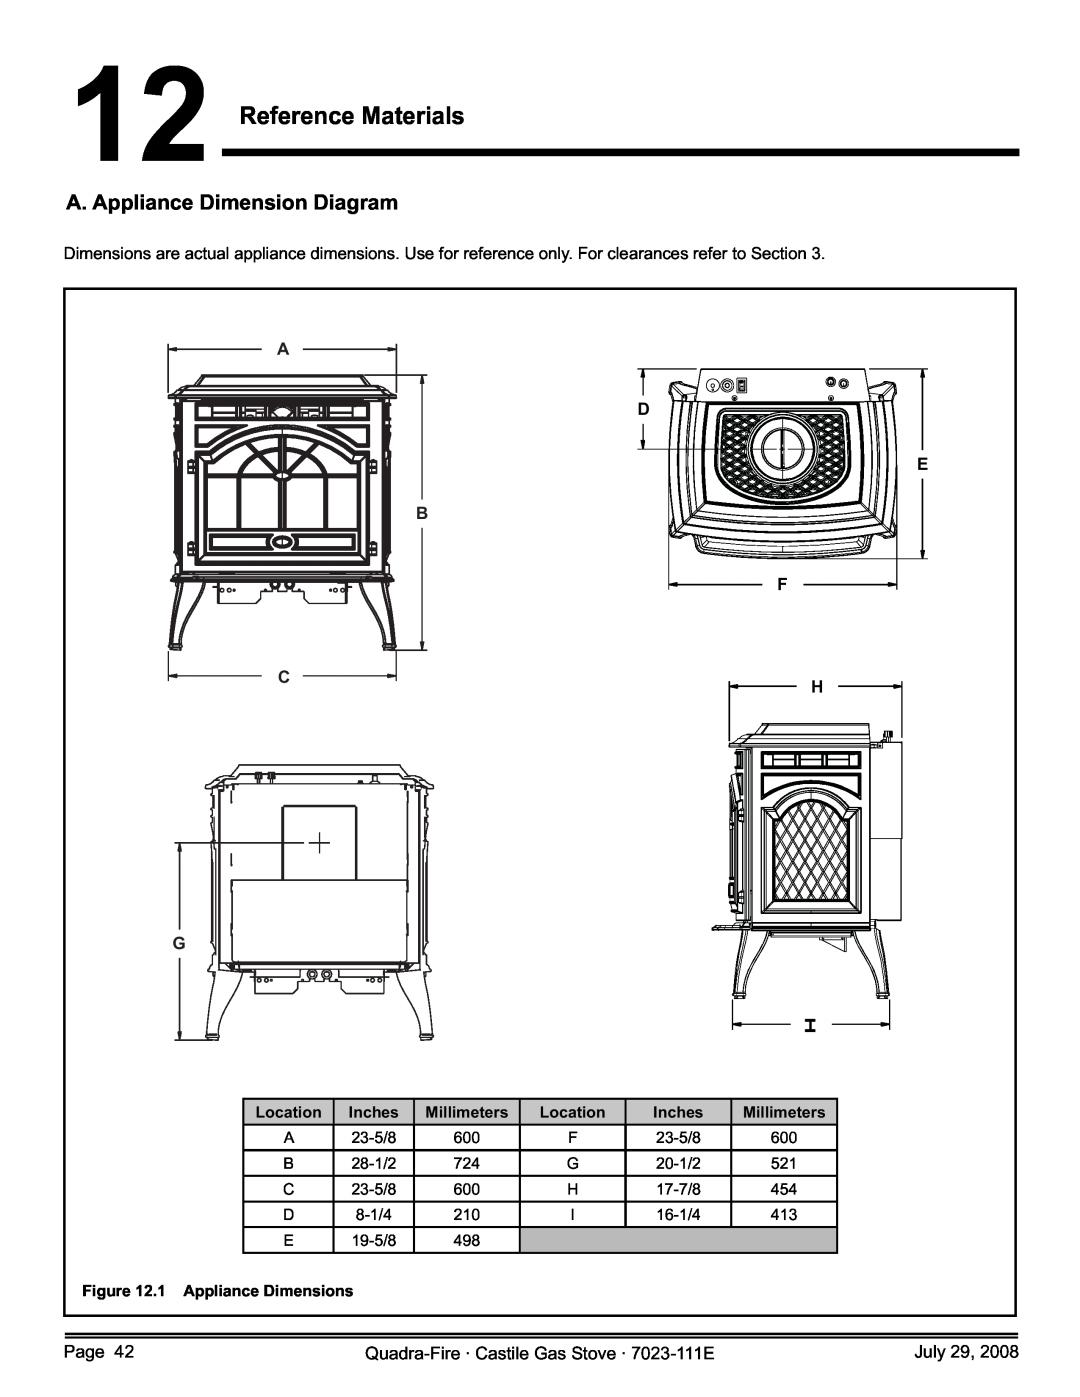 Quadra-Fire 7023-111E, CASTILE-GAS-MBK Reference Materials, A. Appliance Dimension Diagram, Location, Inches, Millimeters 